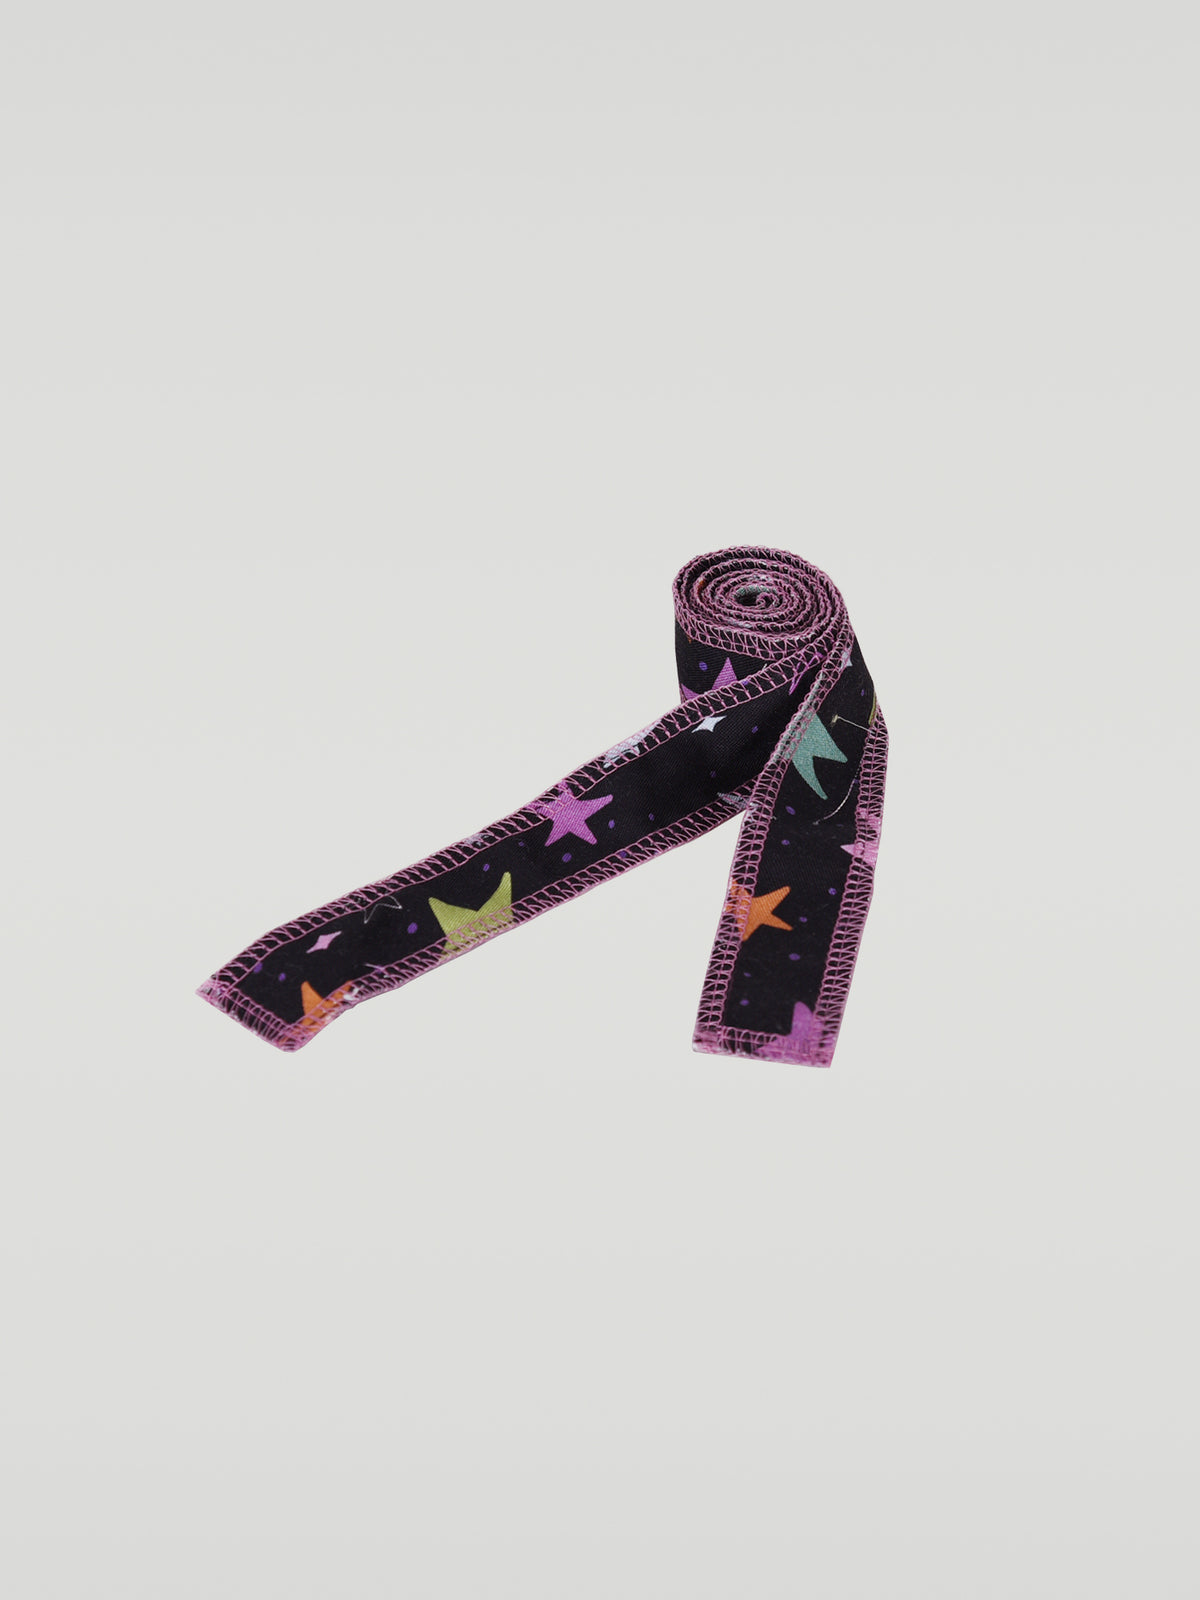 Serged Ribbon Lace - Rainbow Star Print